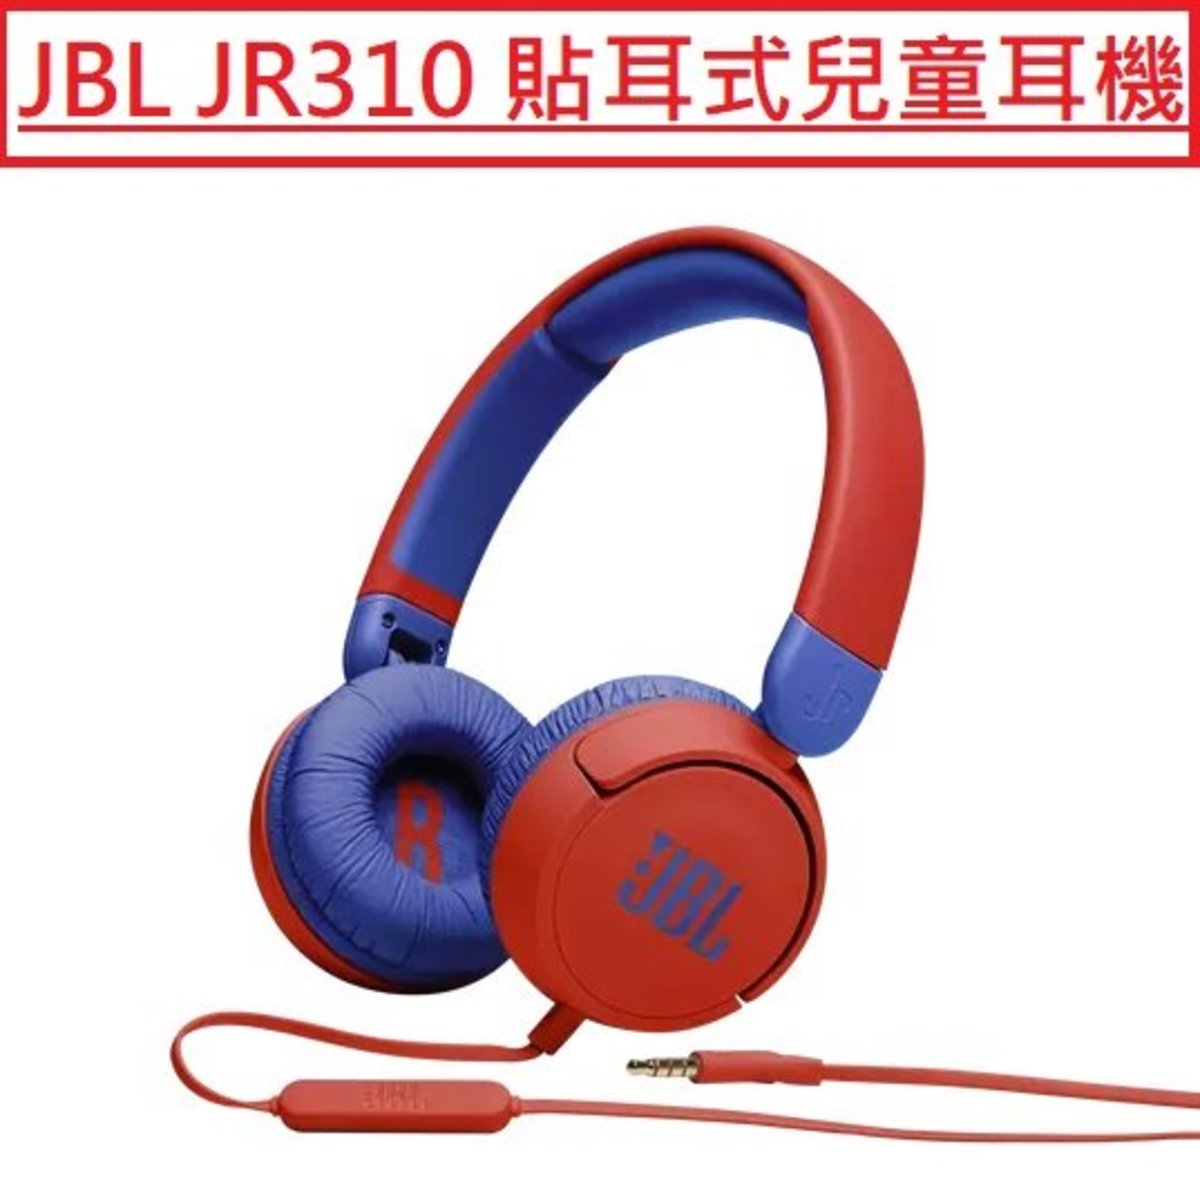 jbl headphones warranty